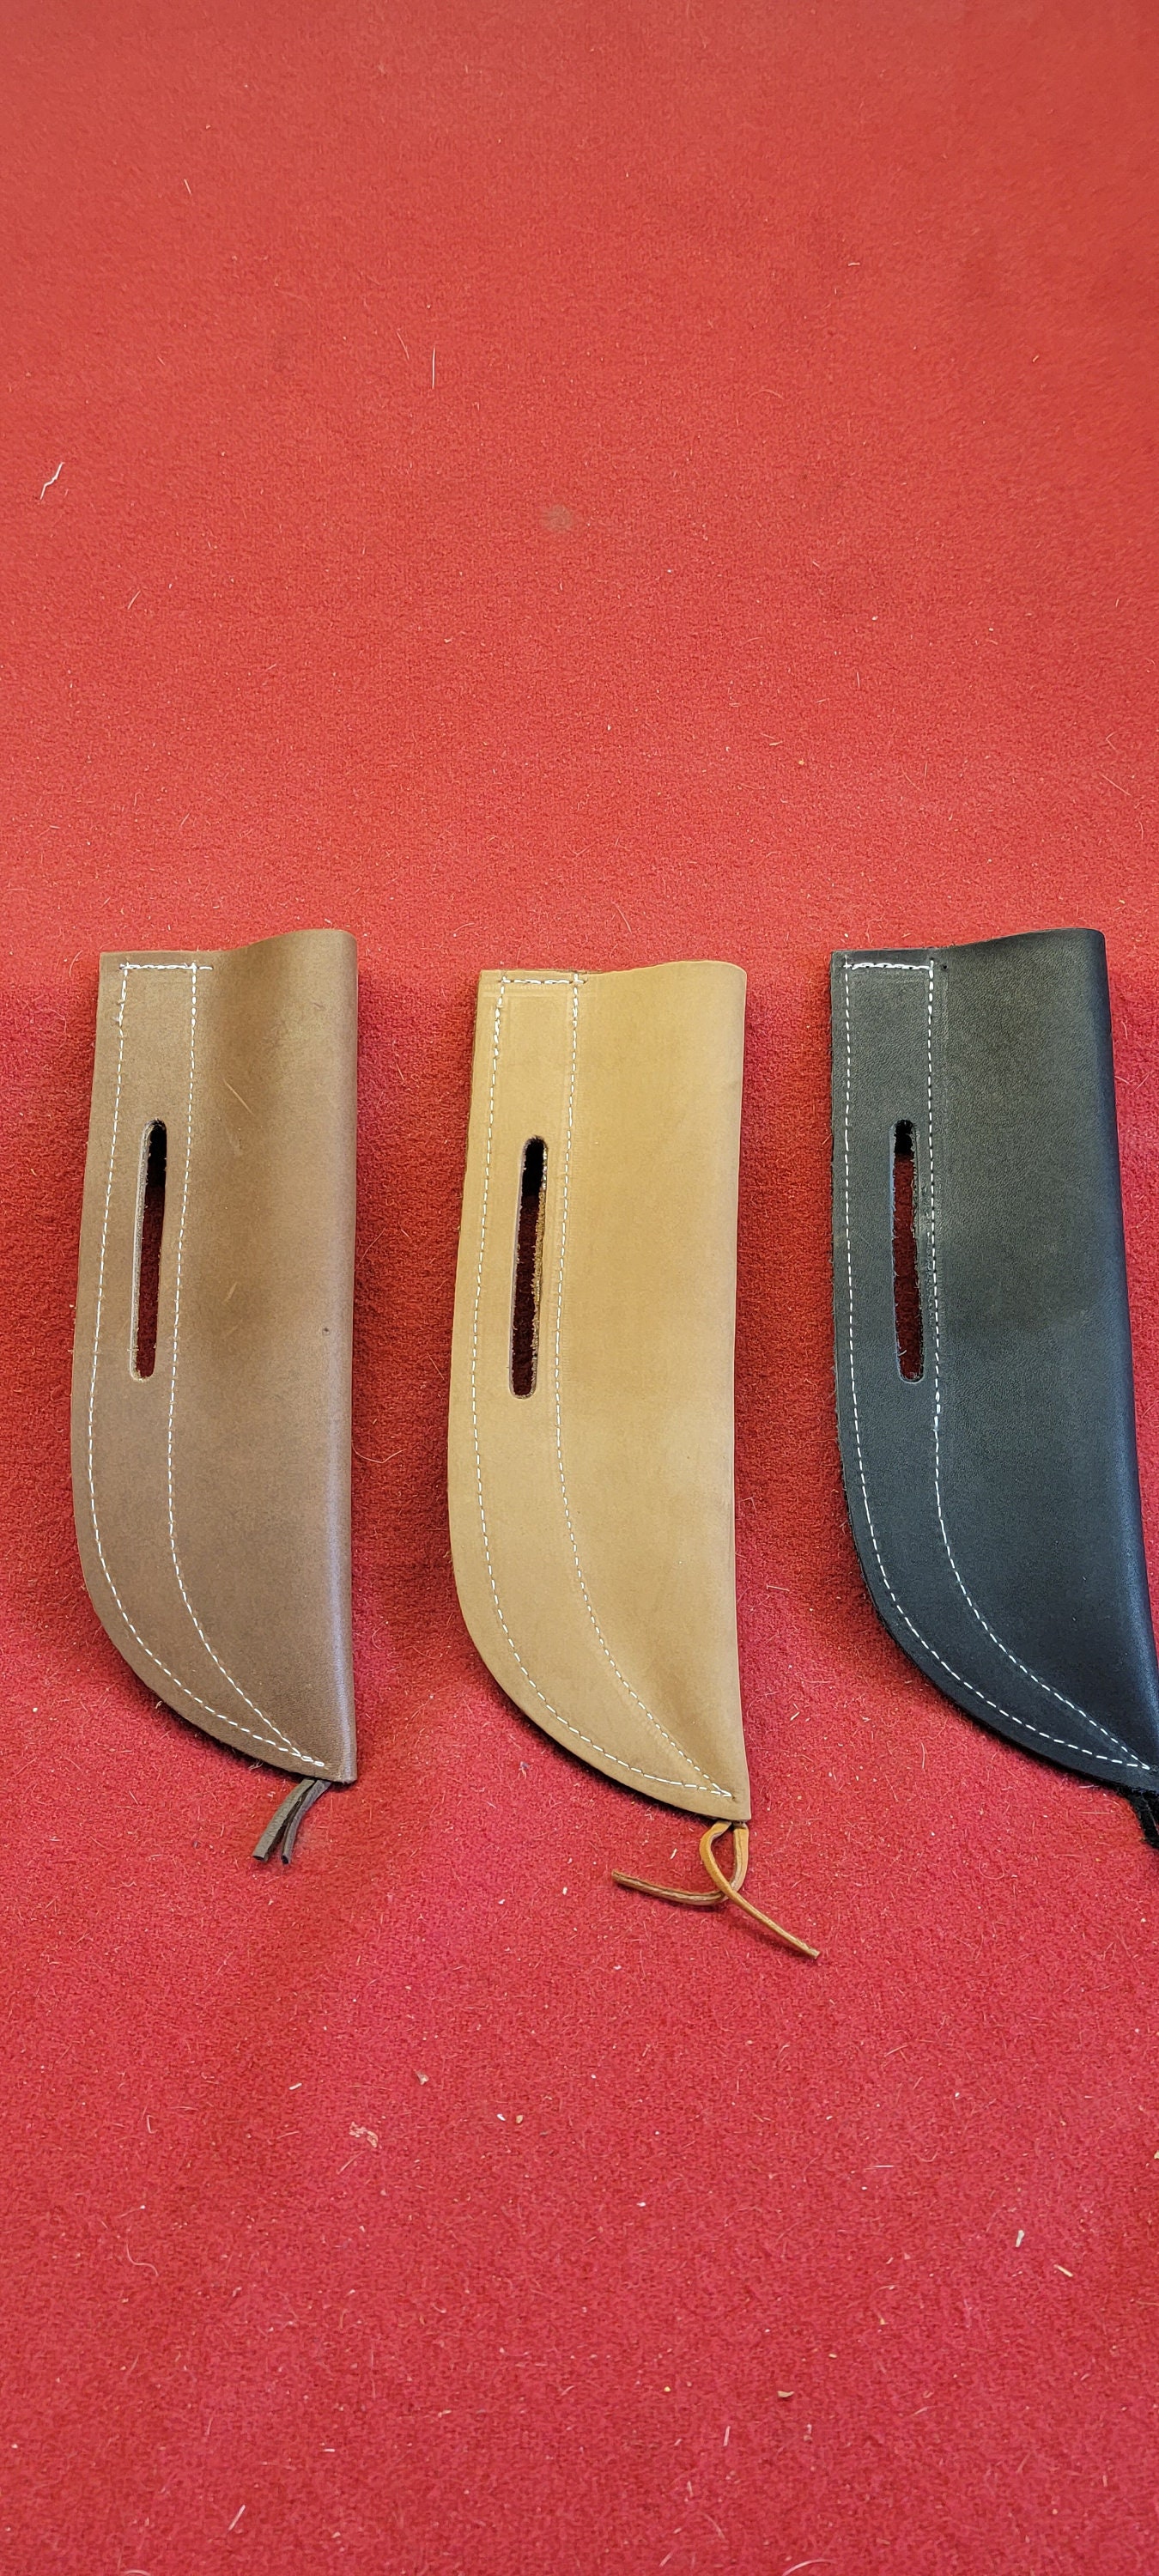 Tandy Leather Large Knife Sheath Kit 44123-00